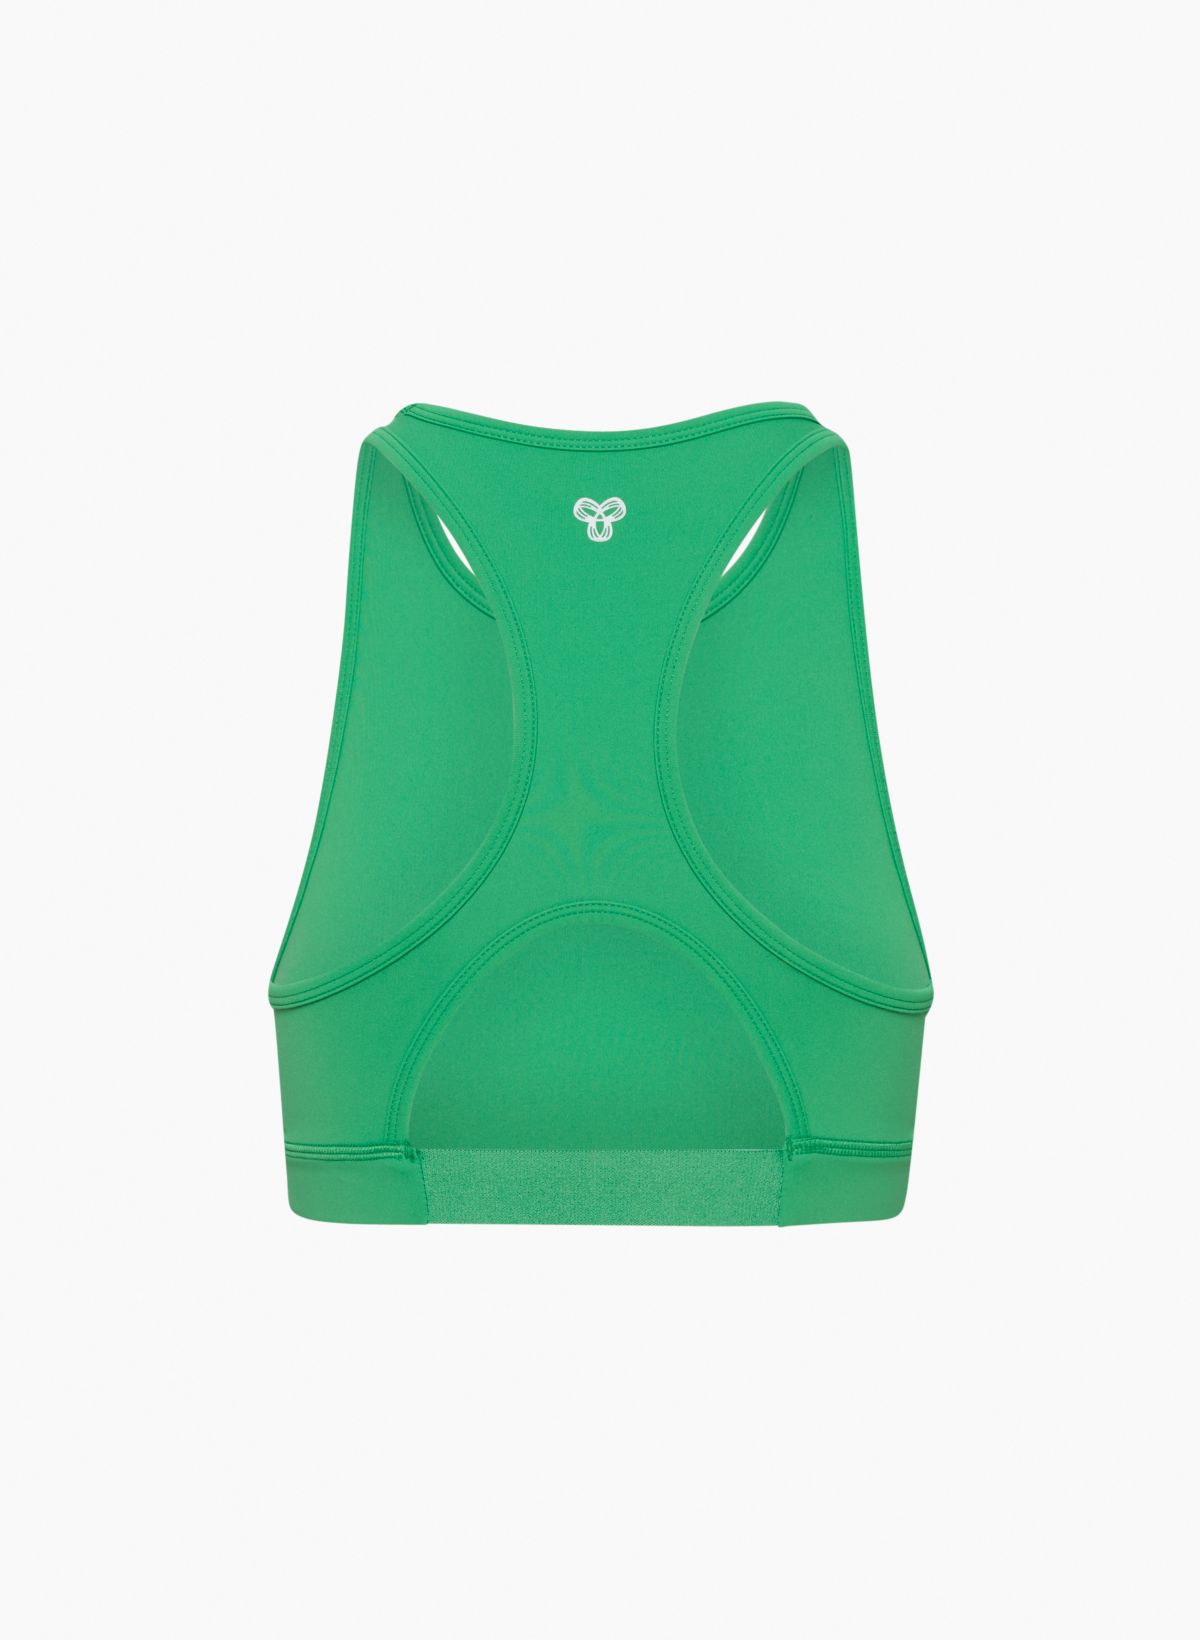 Ardene MOVE Seamless X-Back Sports Bra in Light Green, Size Medium, Polyester/Elastane